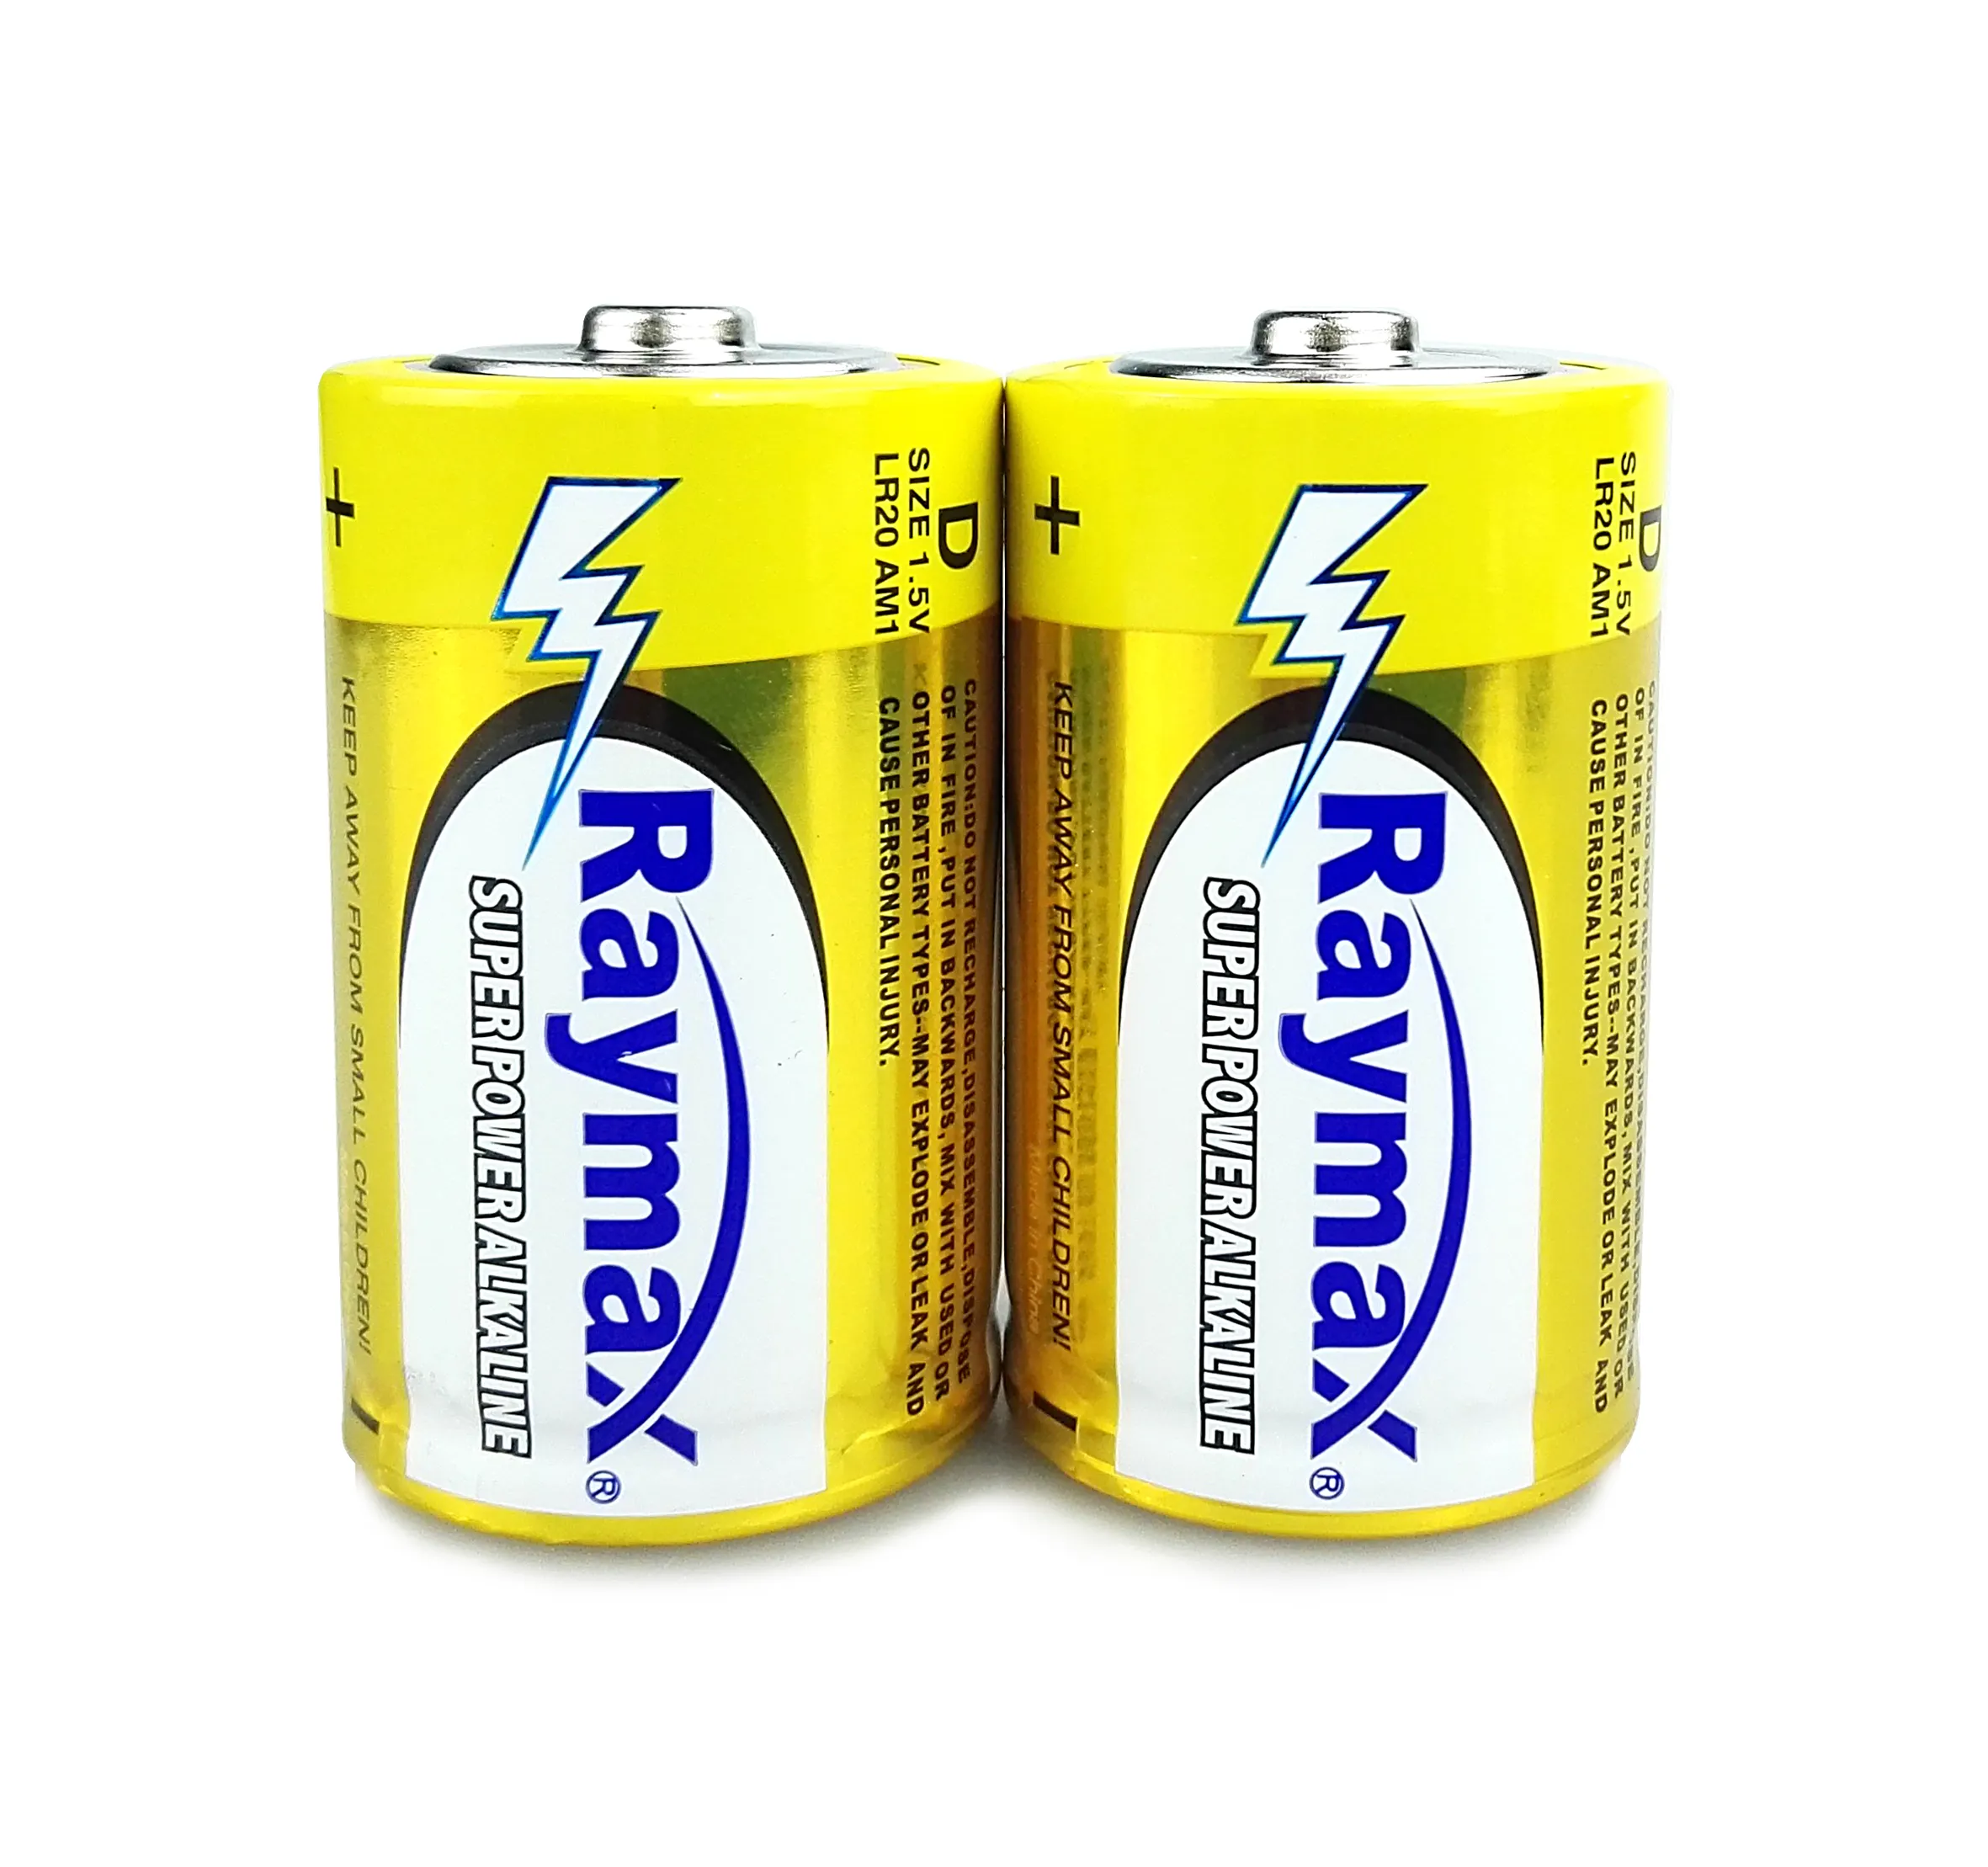 Raymax Индивидуальные батареи дизайн фабрики питания 14000mAh am1 lr20 1,5 v D размер щелочной батареи